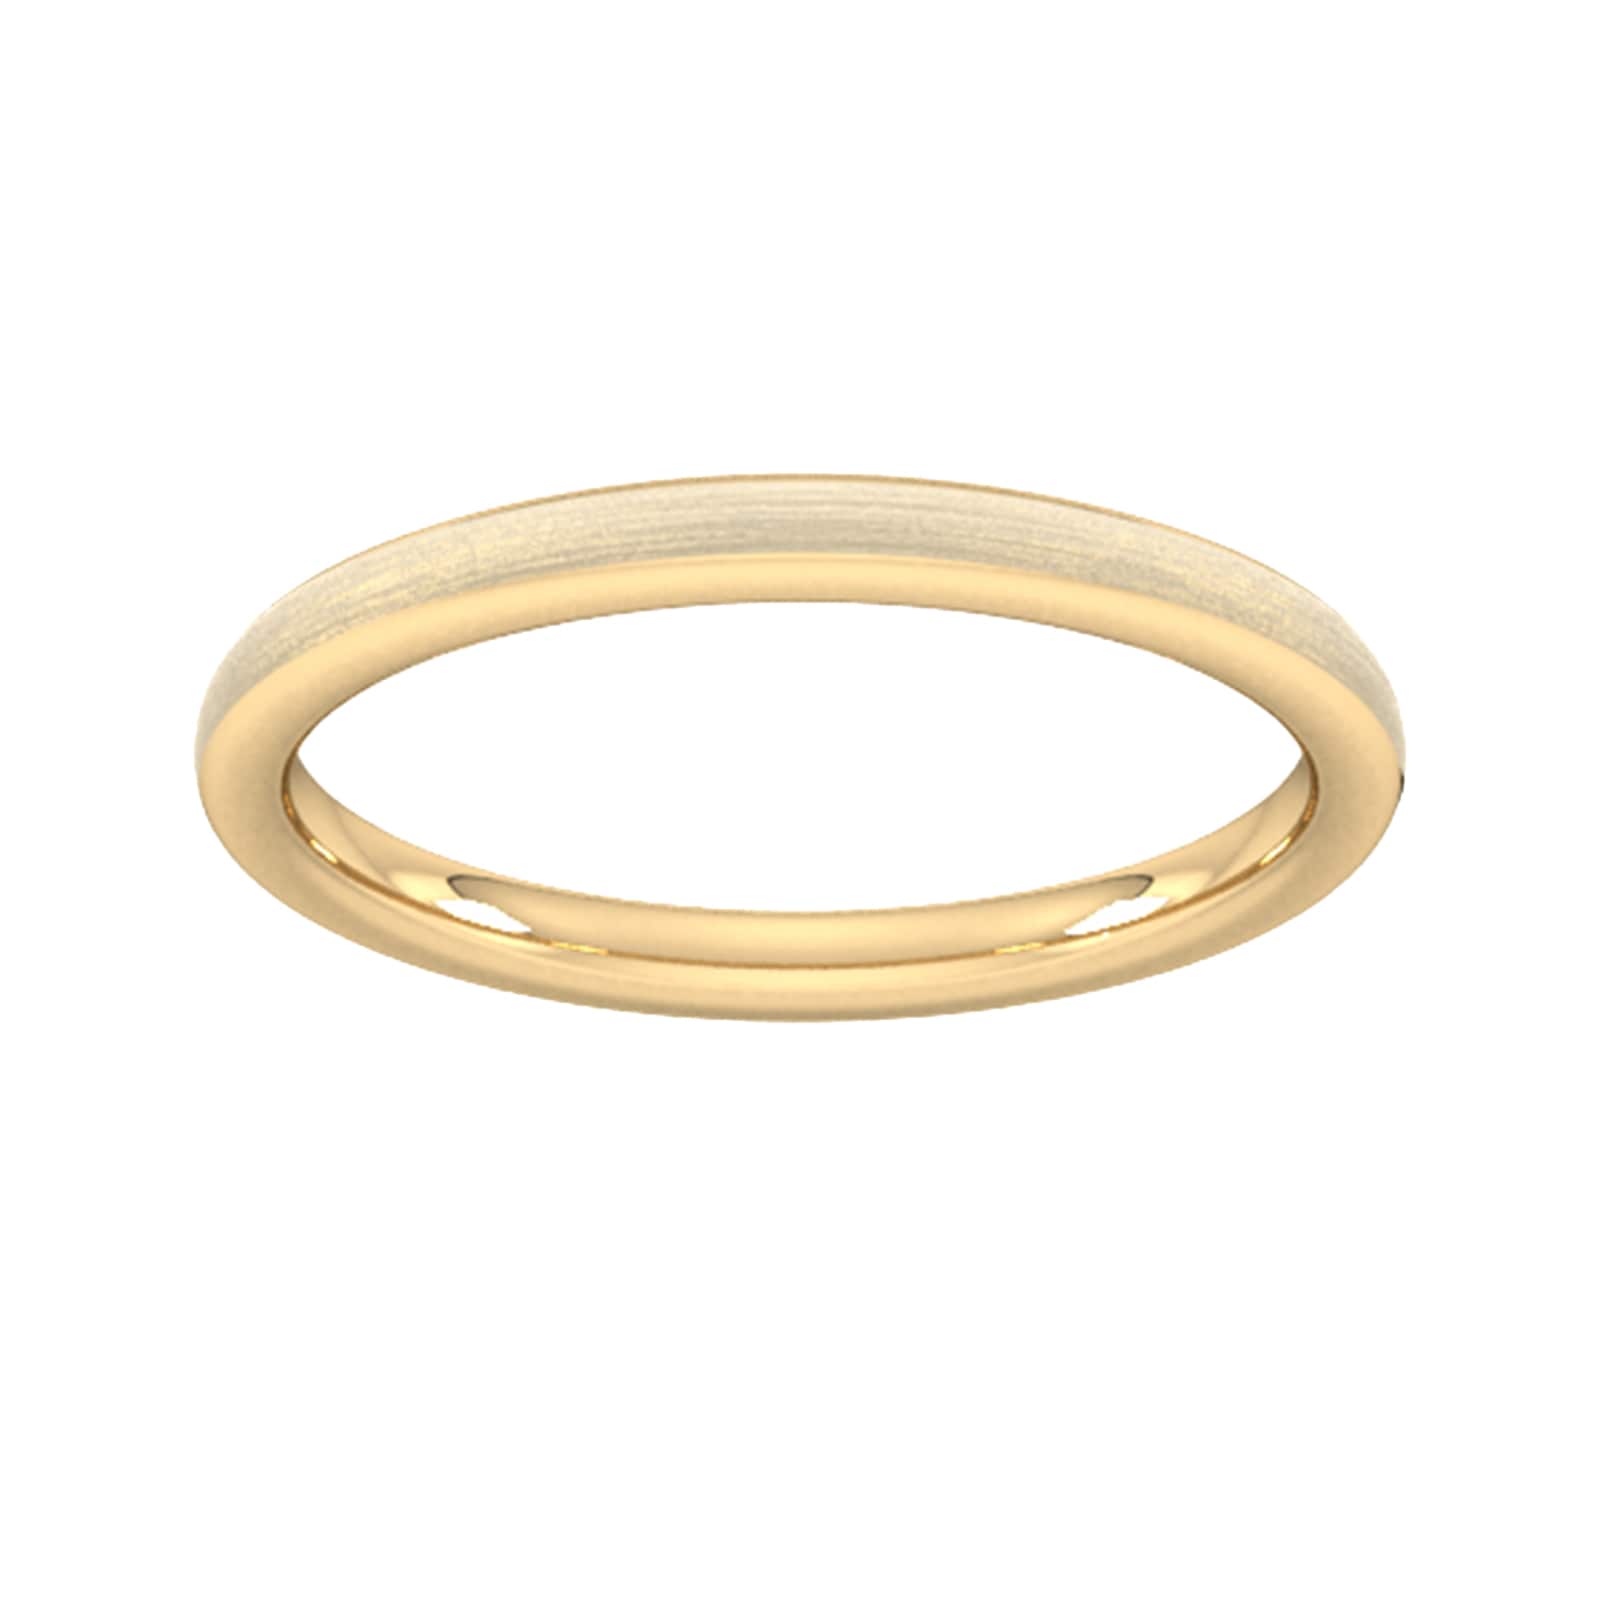 2mm D Shape Heavy Matt Finished Wedding Ring In 9 Carat Yellow Gold - Ring Size Q